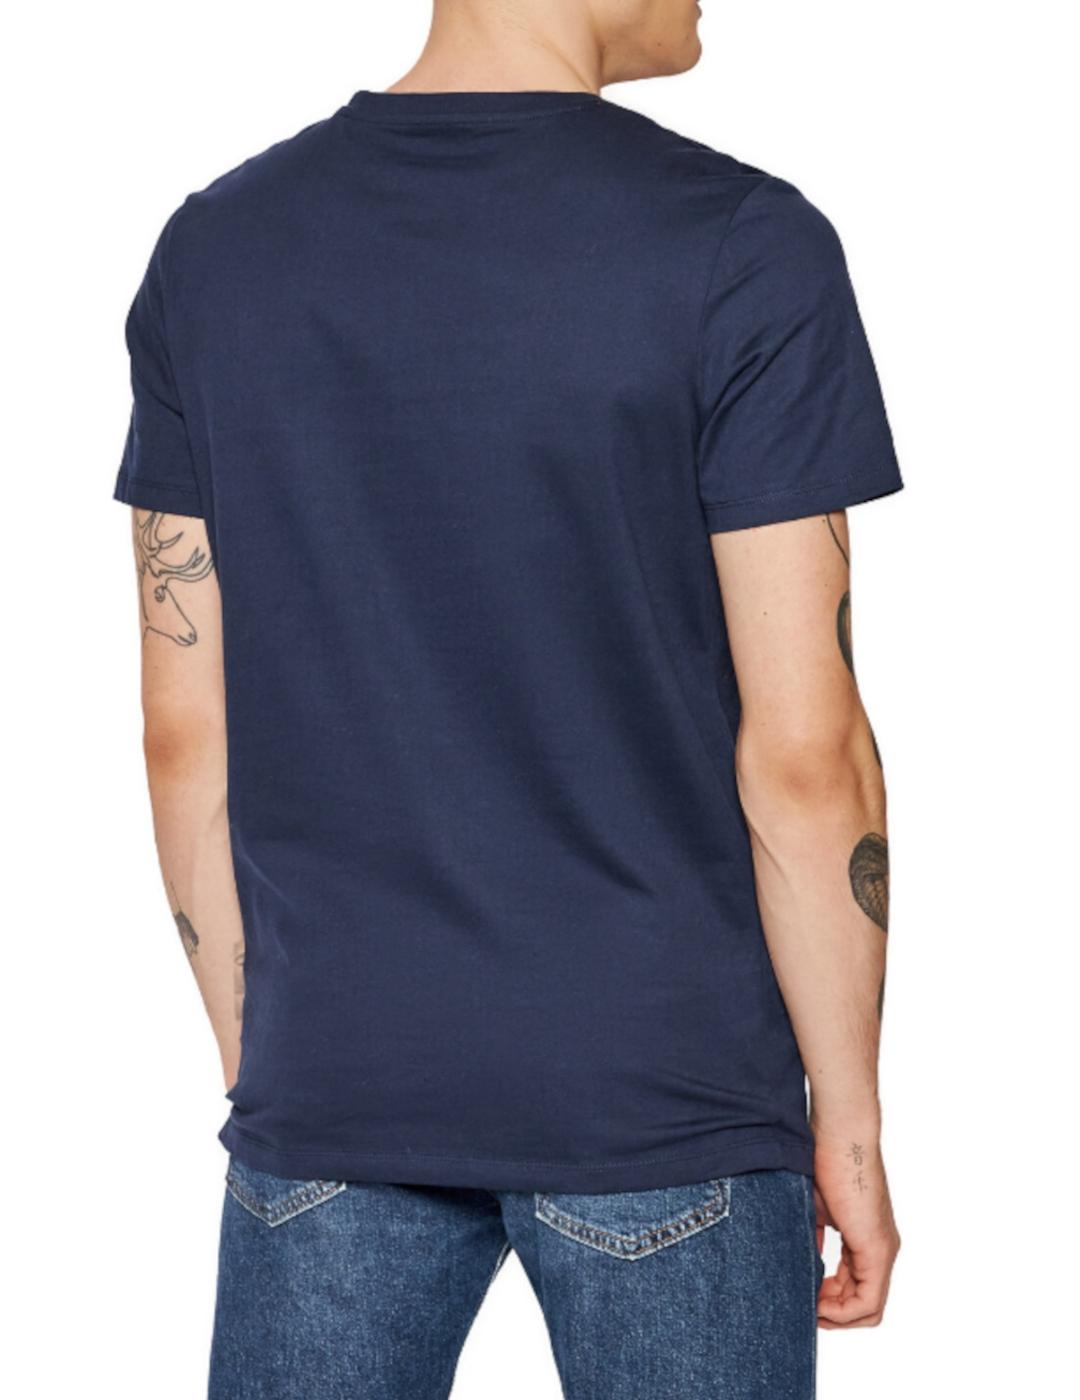 Camiseta Jack-Jones Brat marino para hombre-a